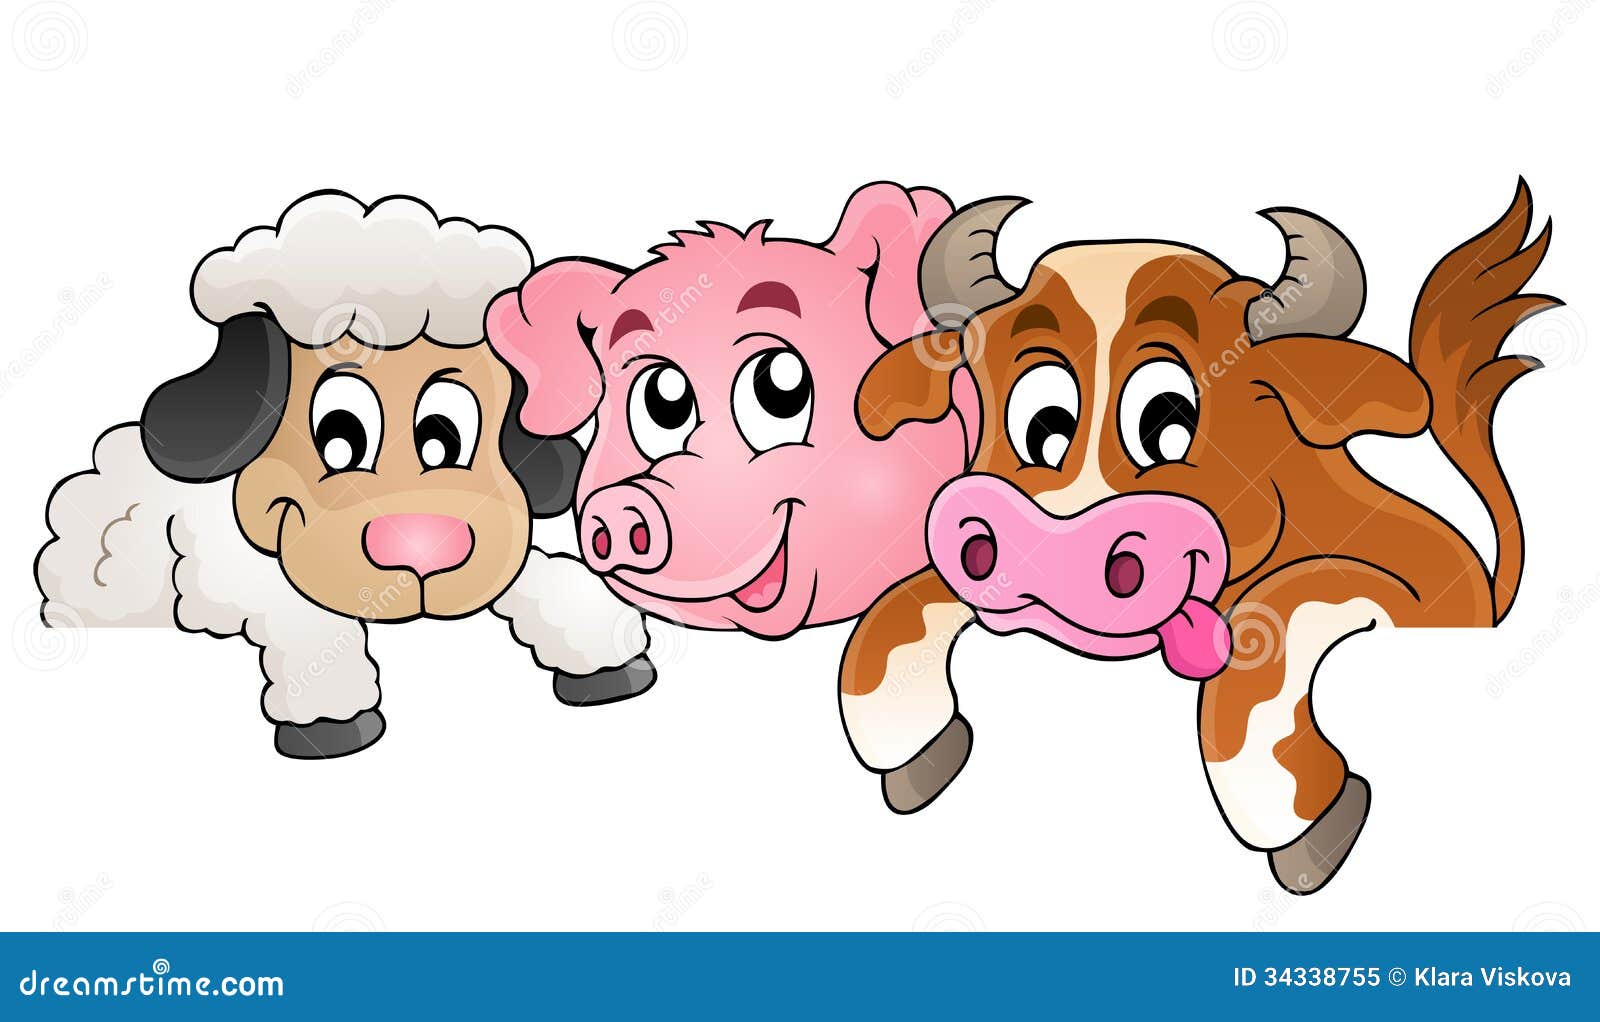 cartoon clipart of farm animals - photo #34